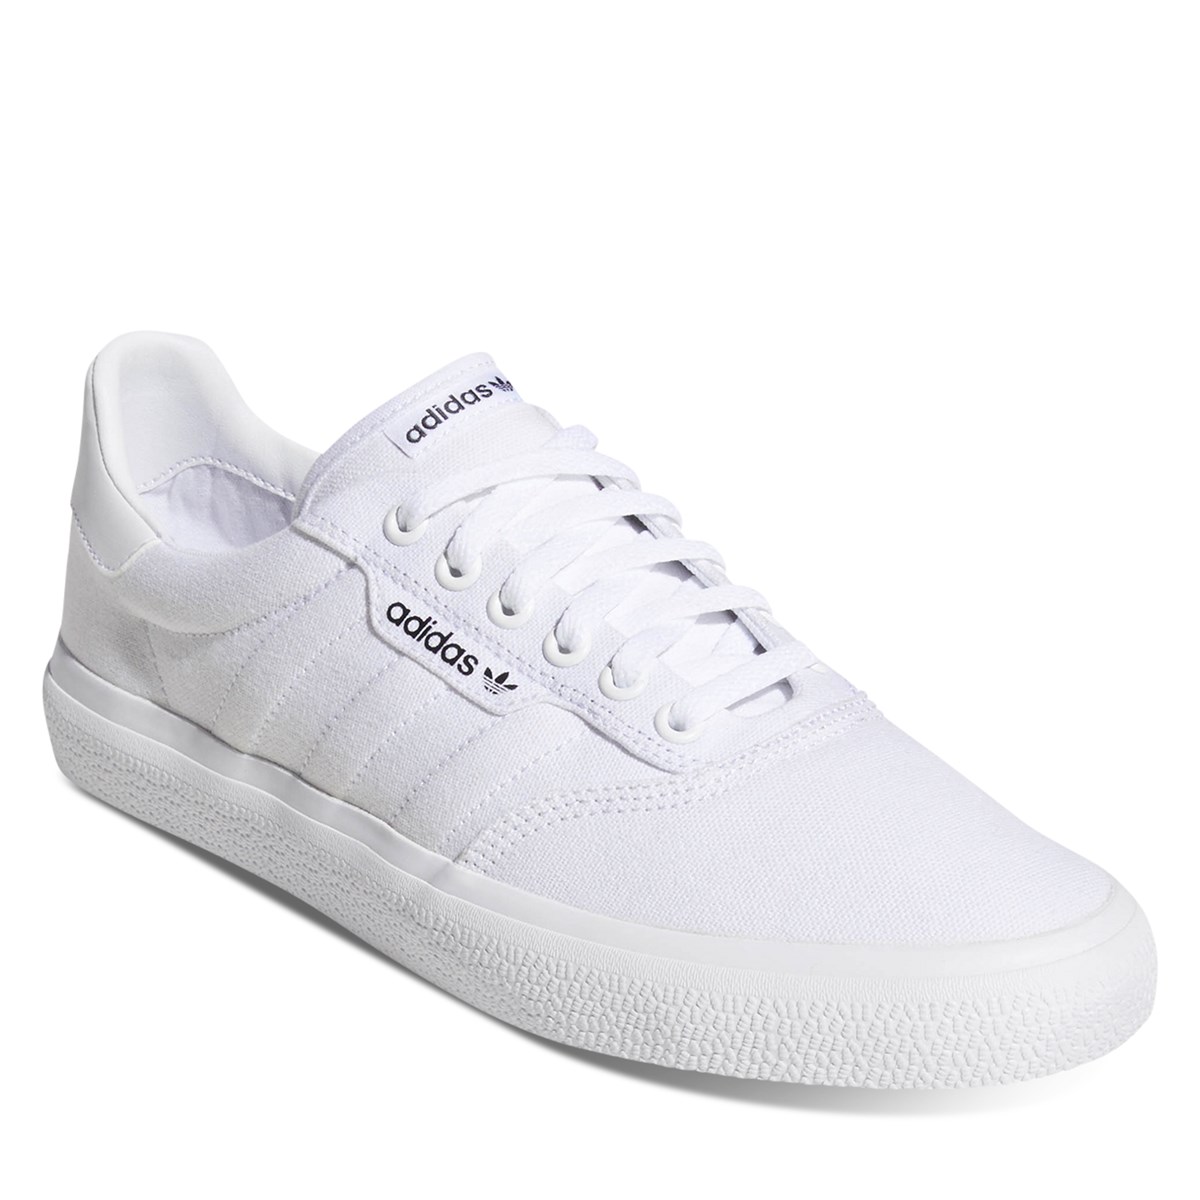 adidas 3mc vulc white